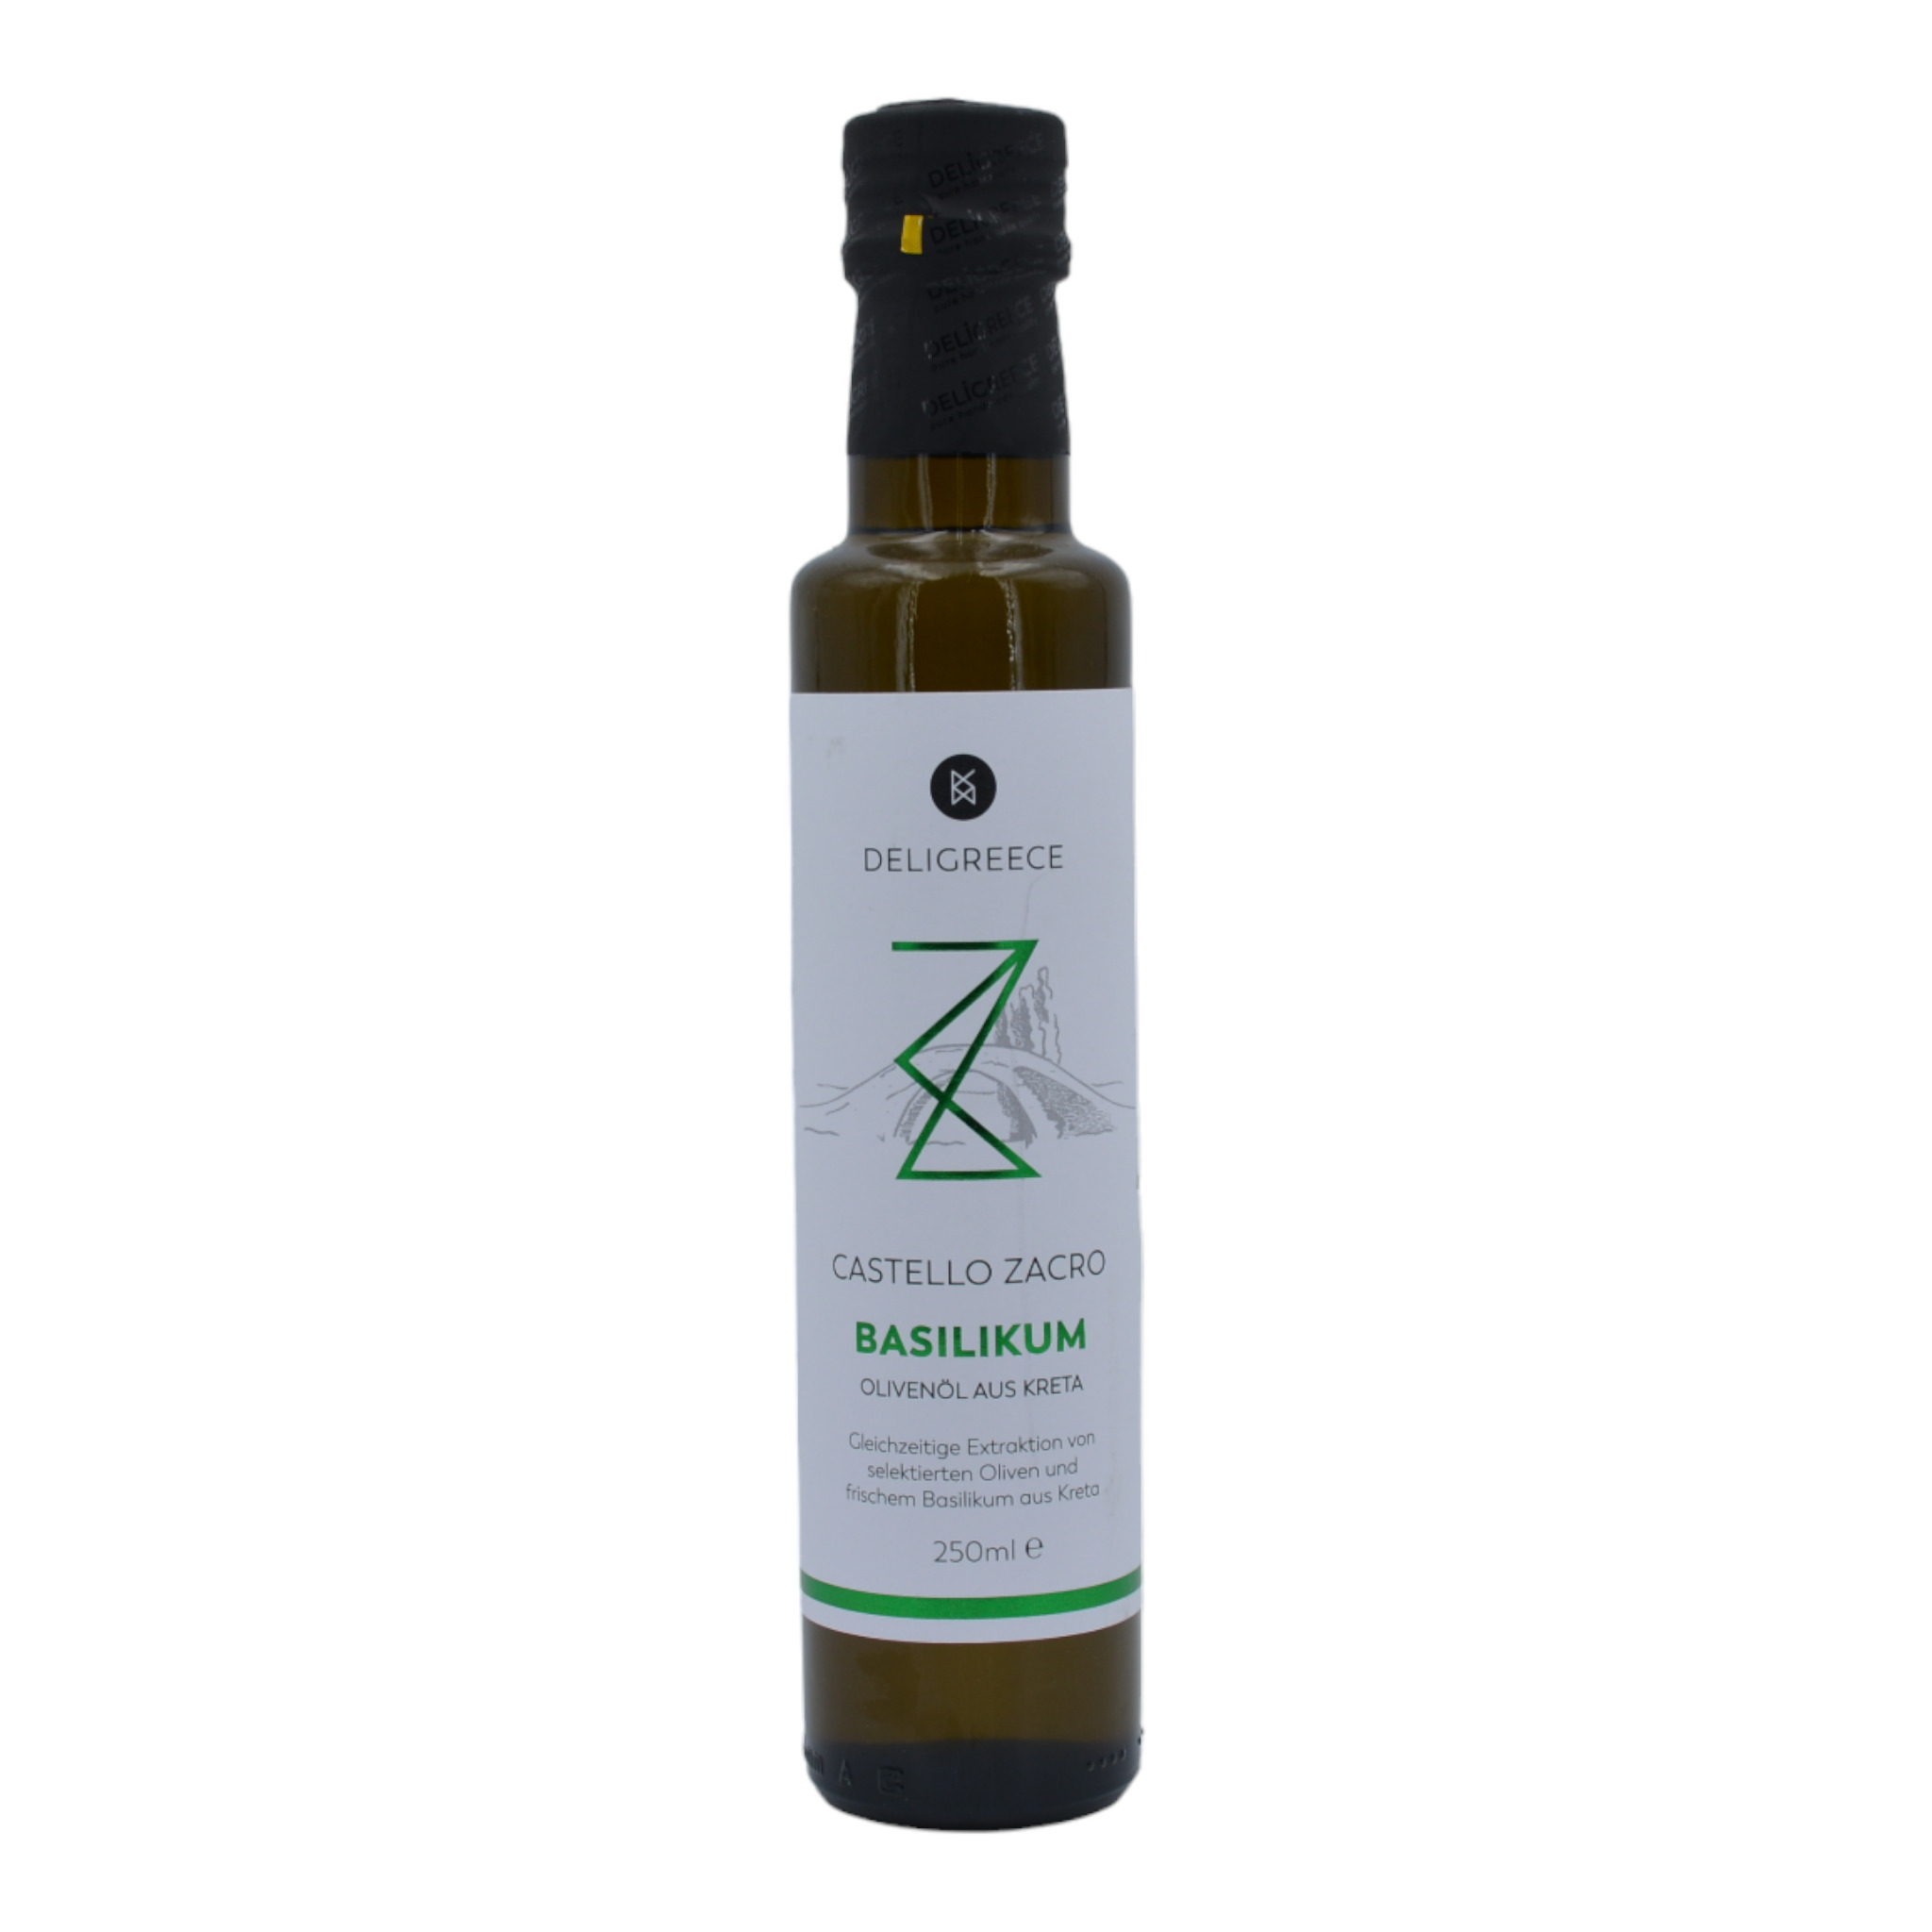 4260054323050Deligreece Castello Zacro Basilikum Oliveöl aus Kreta f